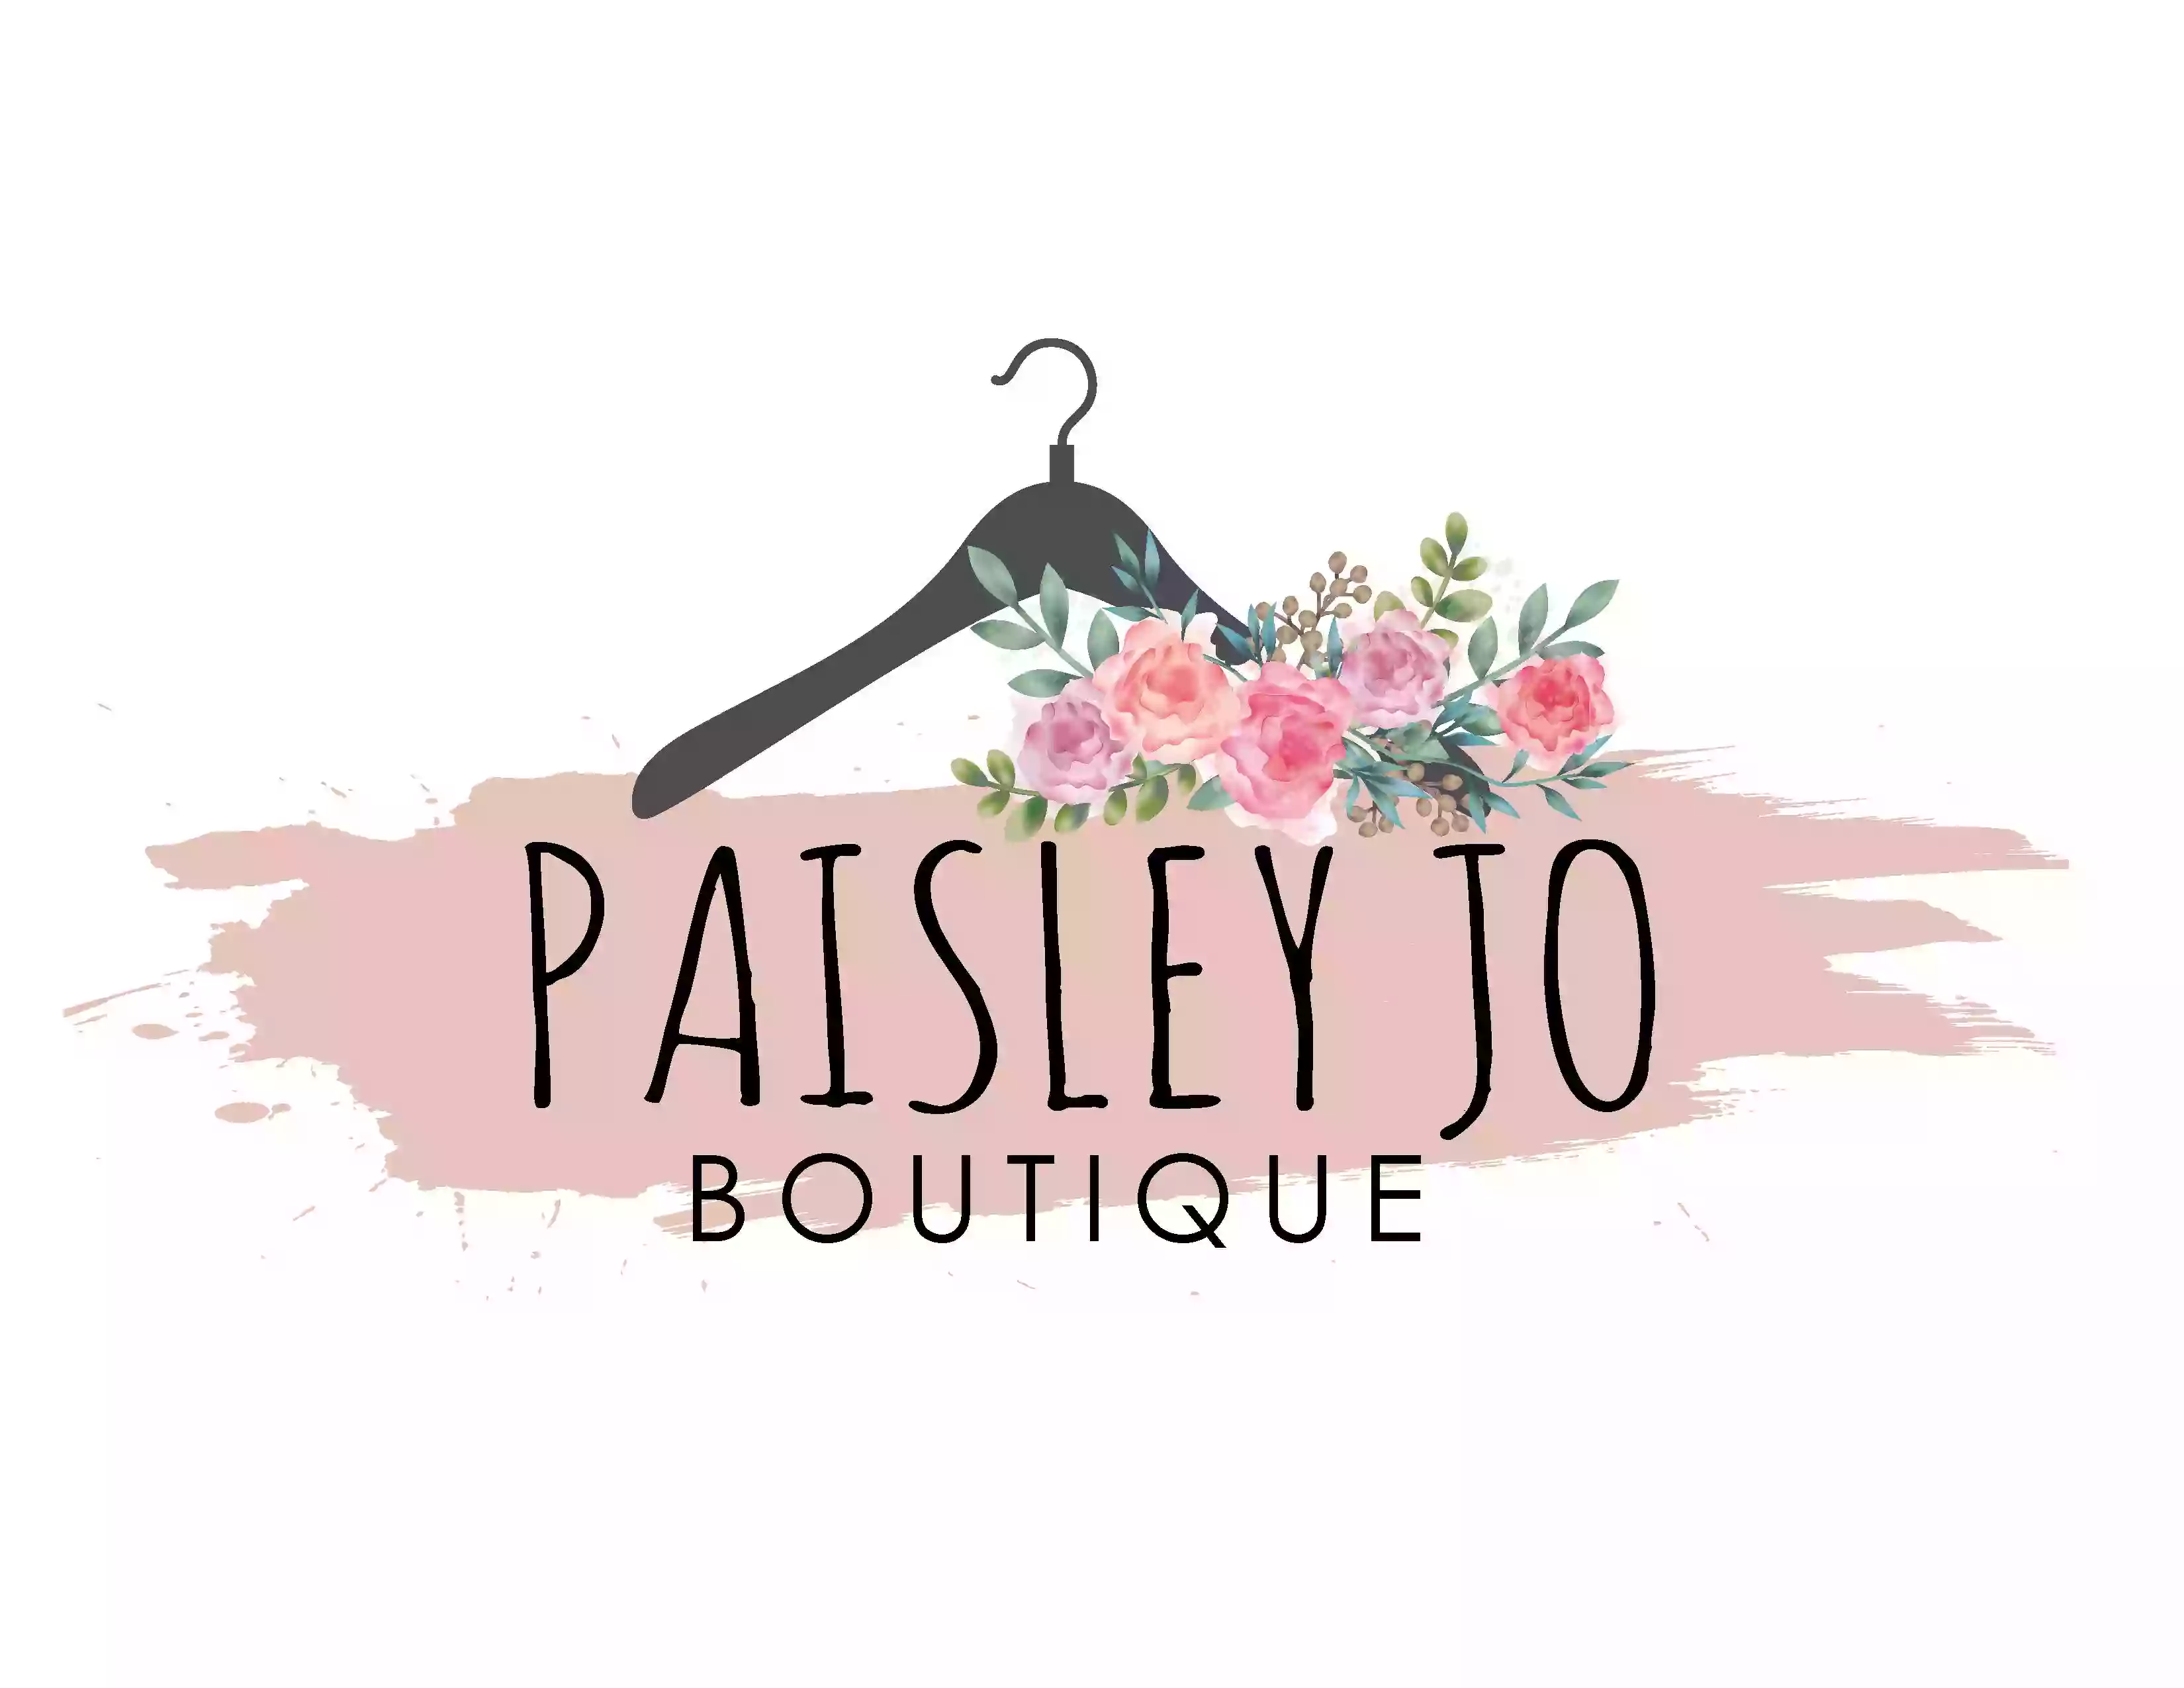 Paisley Jo Boutique